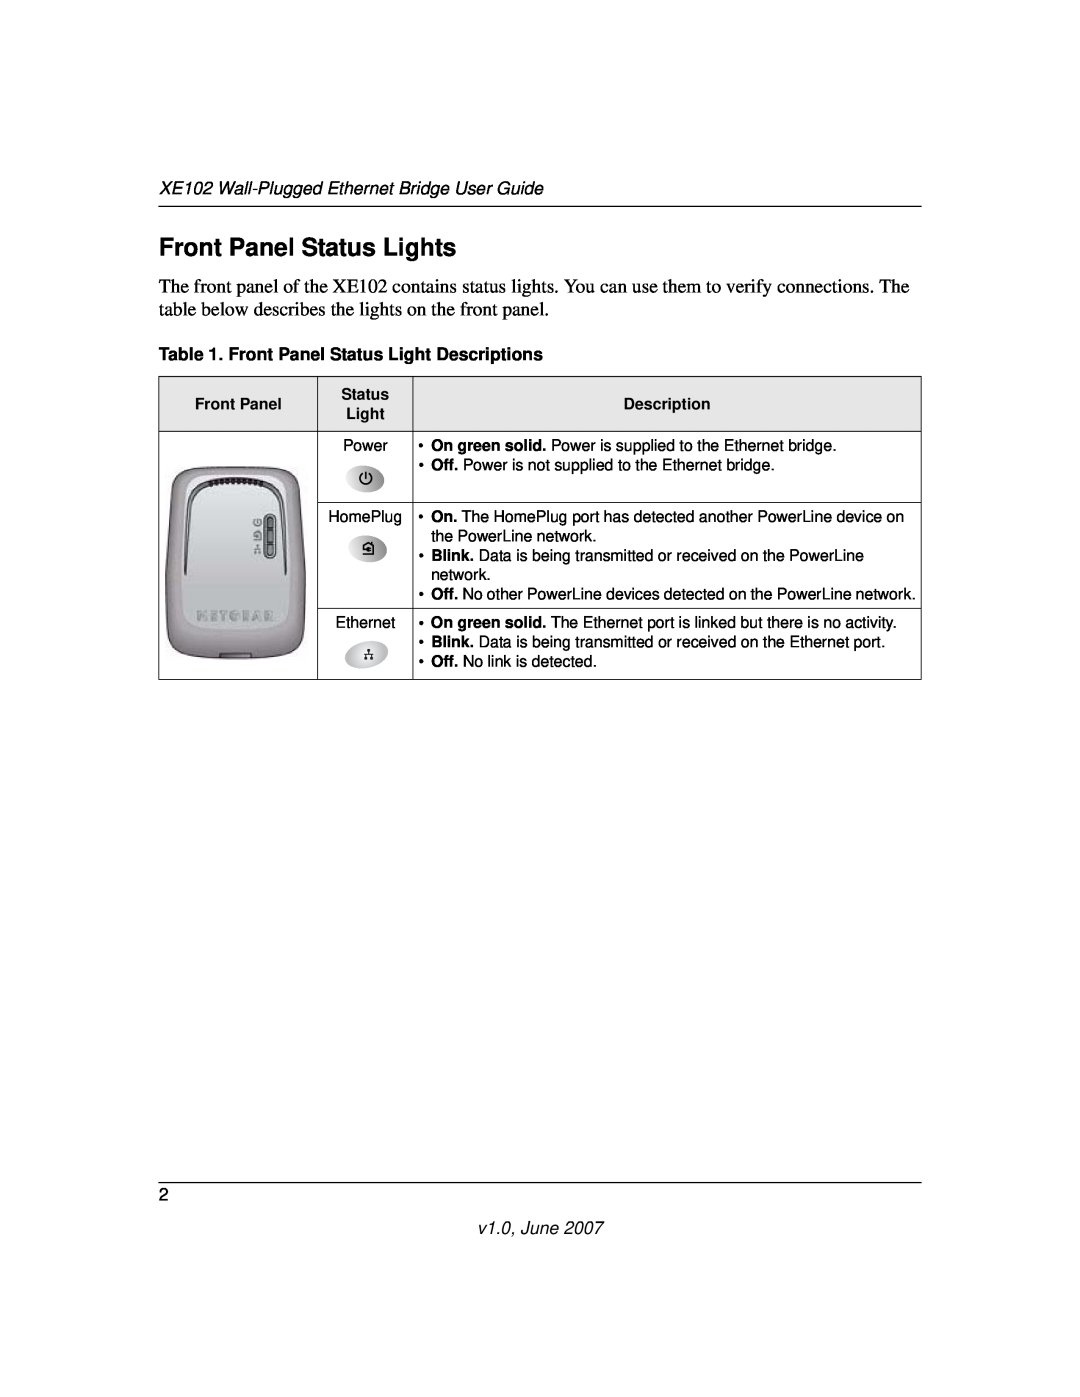 NETGEAR Front Panel Status Lights, XE102 Wall-Plugged Ethernet Bridge User Guide, Front Panel Status Light Descriptions 